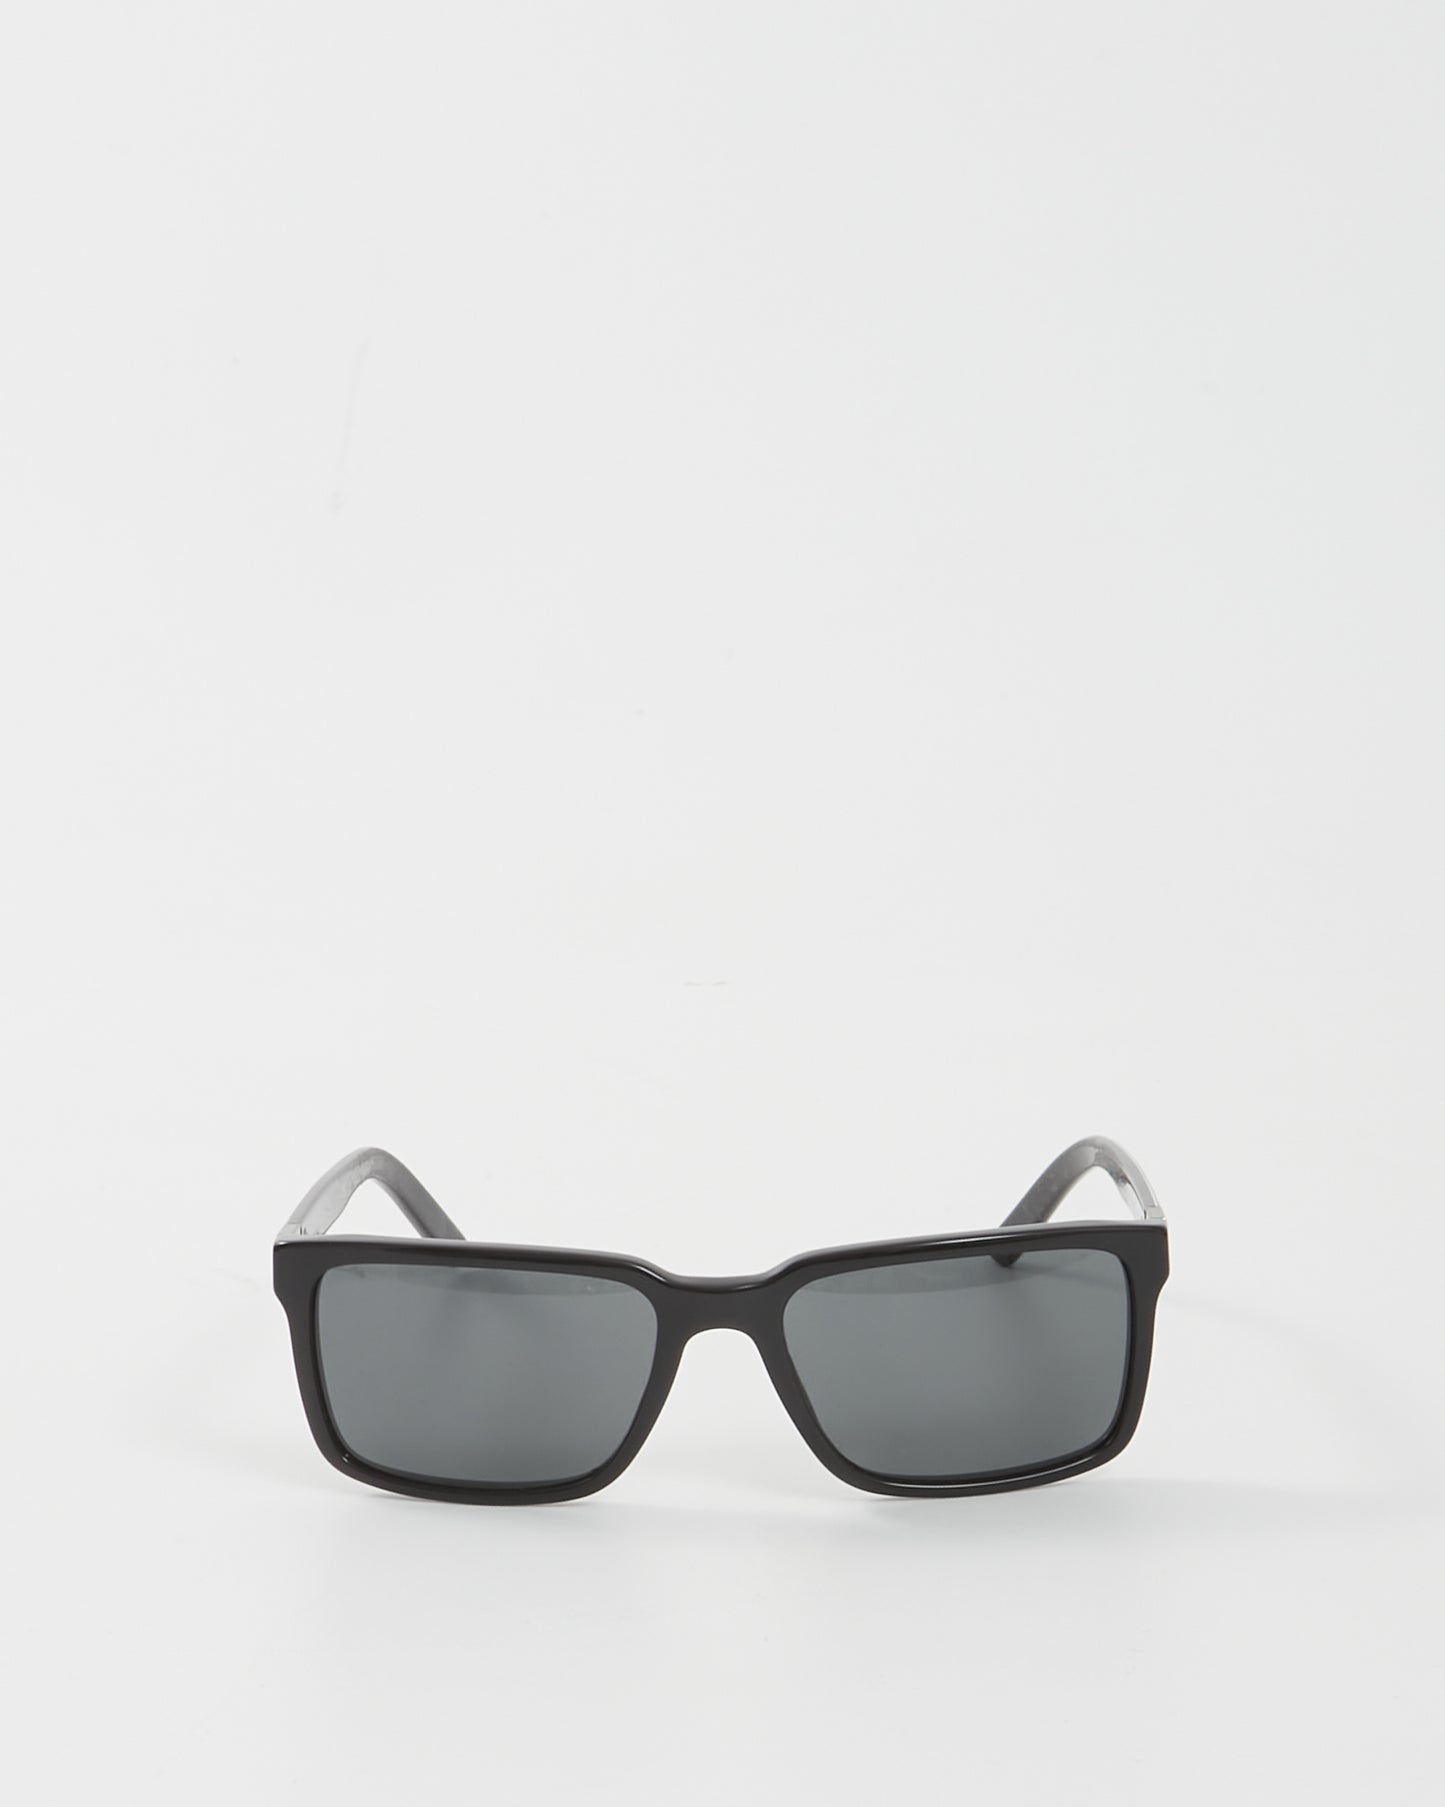 Burberry Black Square B4097 Sunglasses